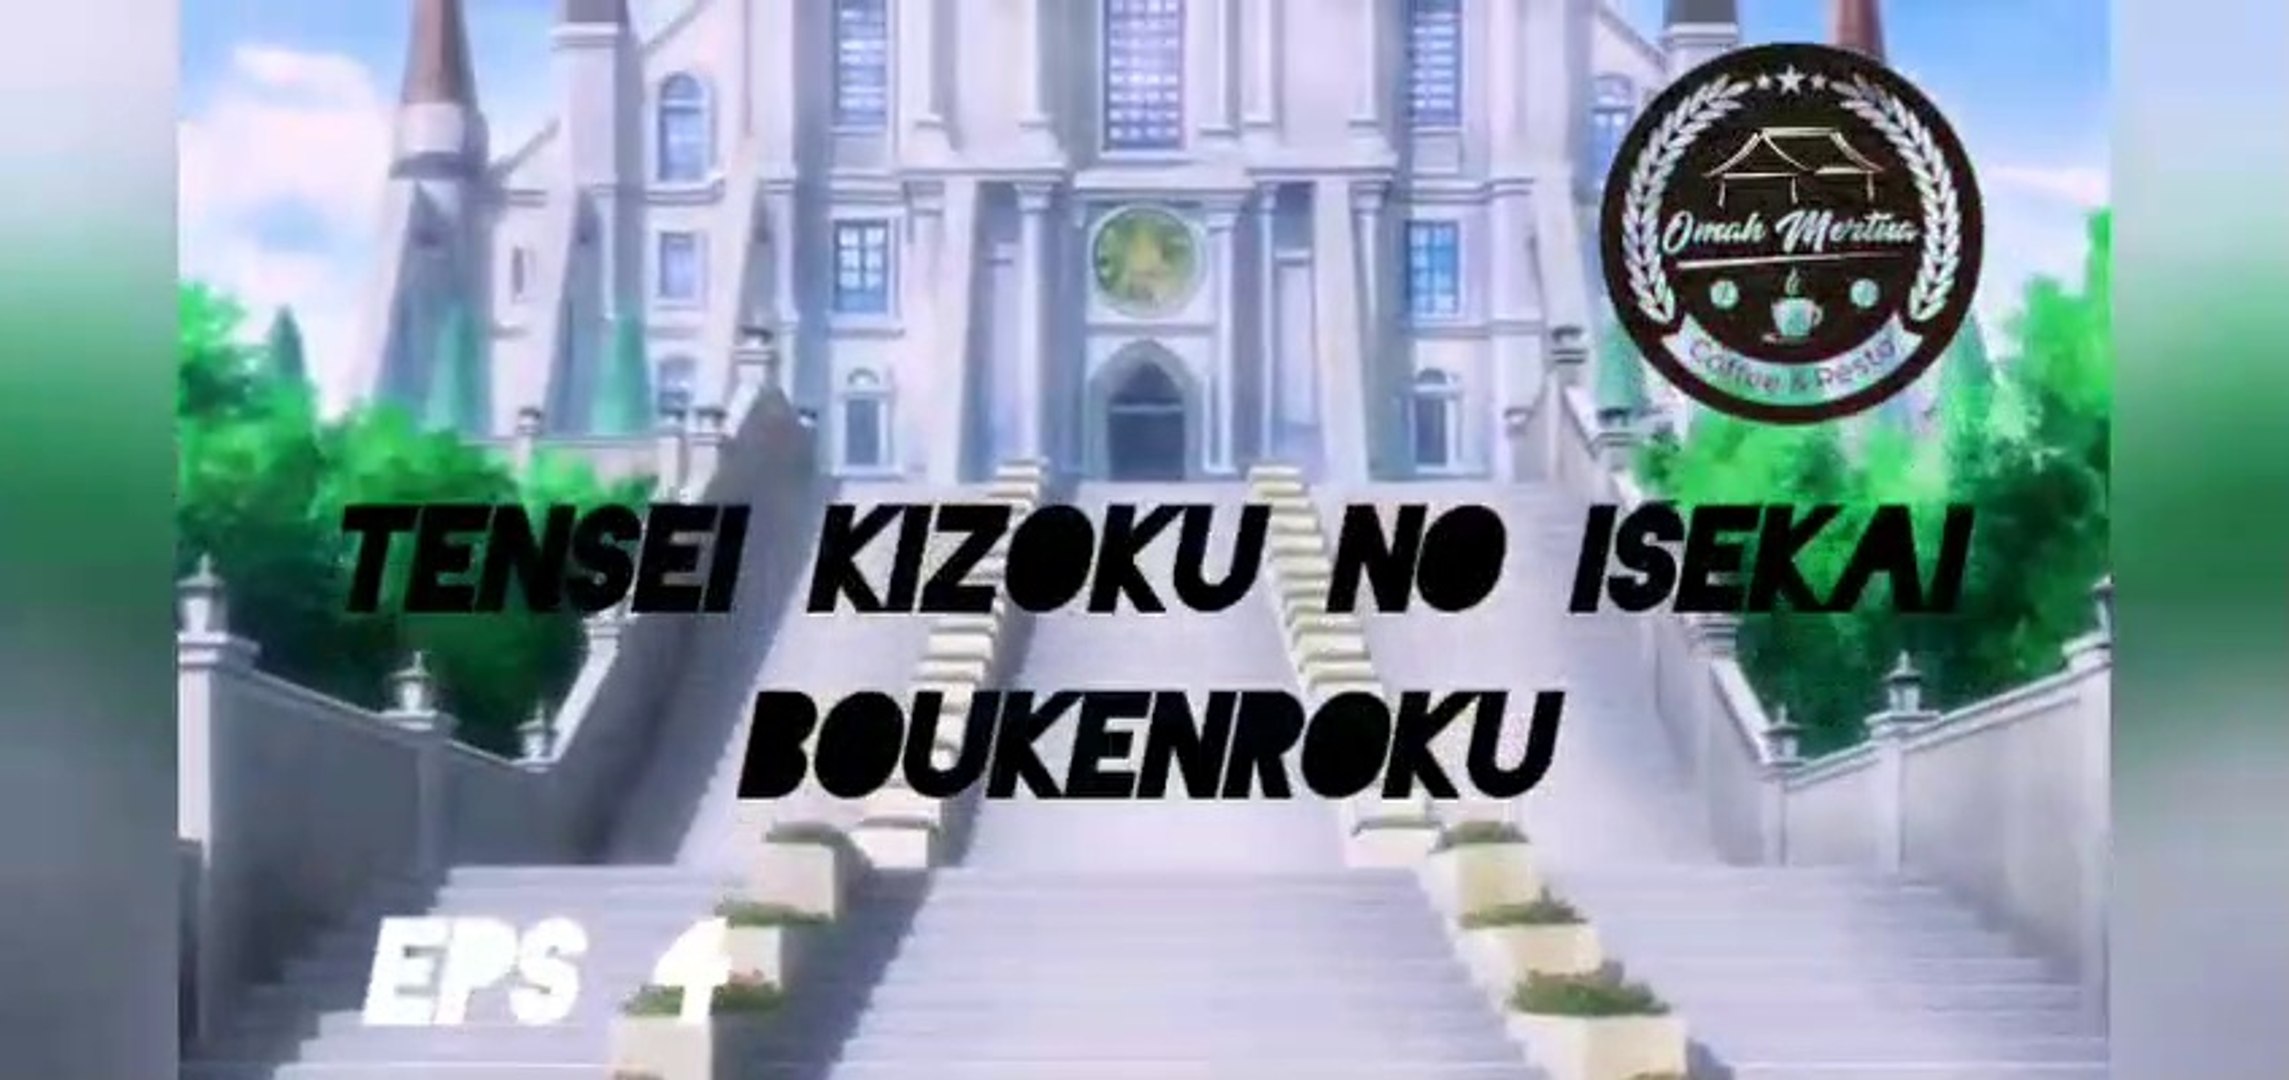 tensei kizoku no isekai boukenroku dublado (EP 4) 